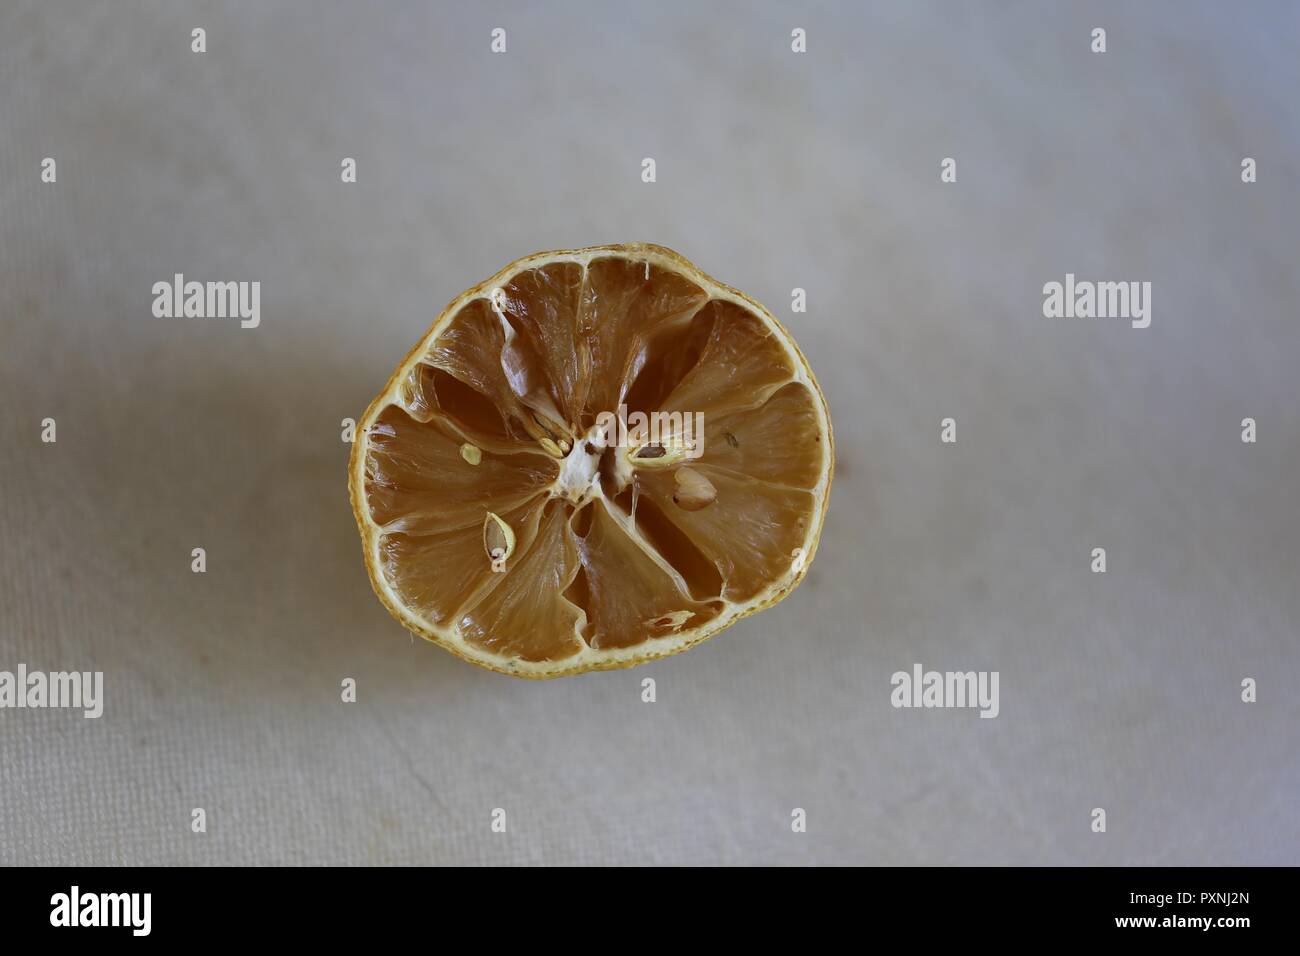 Half A Dry Lemon. Forgotten half dried lemon fruit. Stock Photo